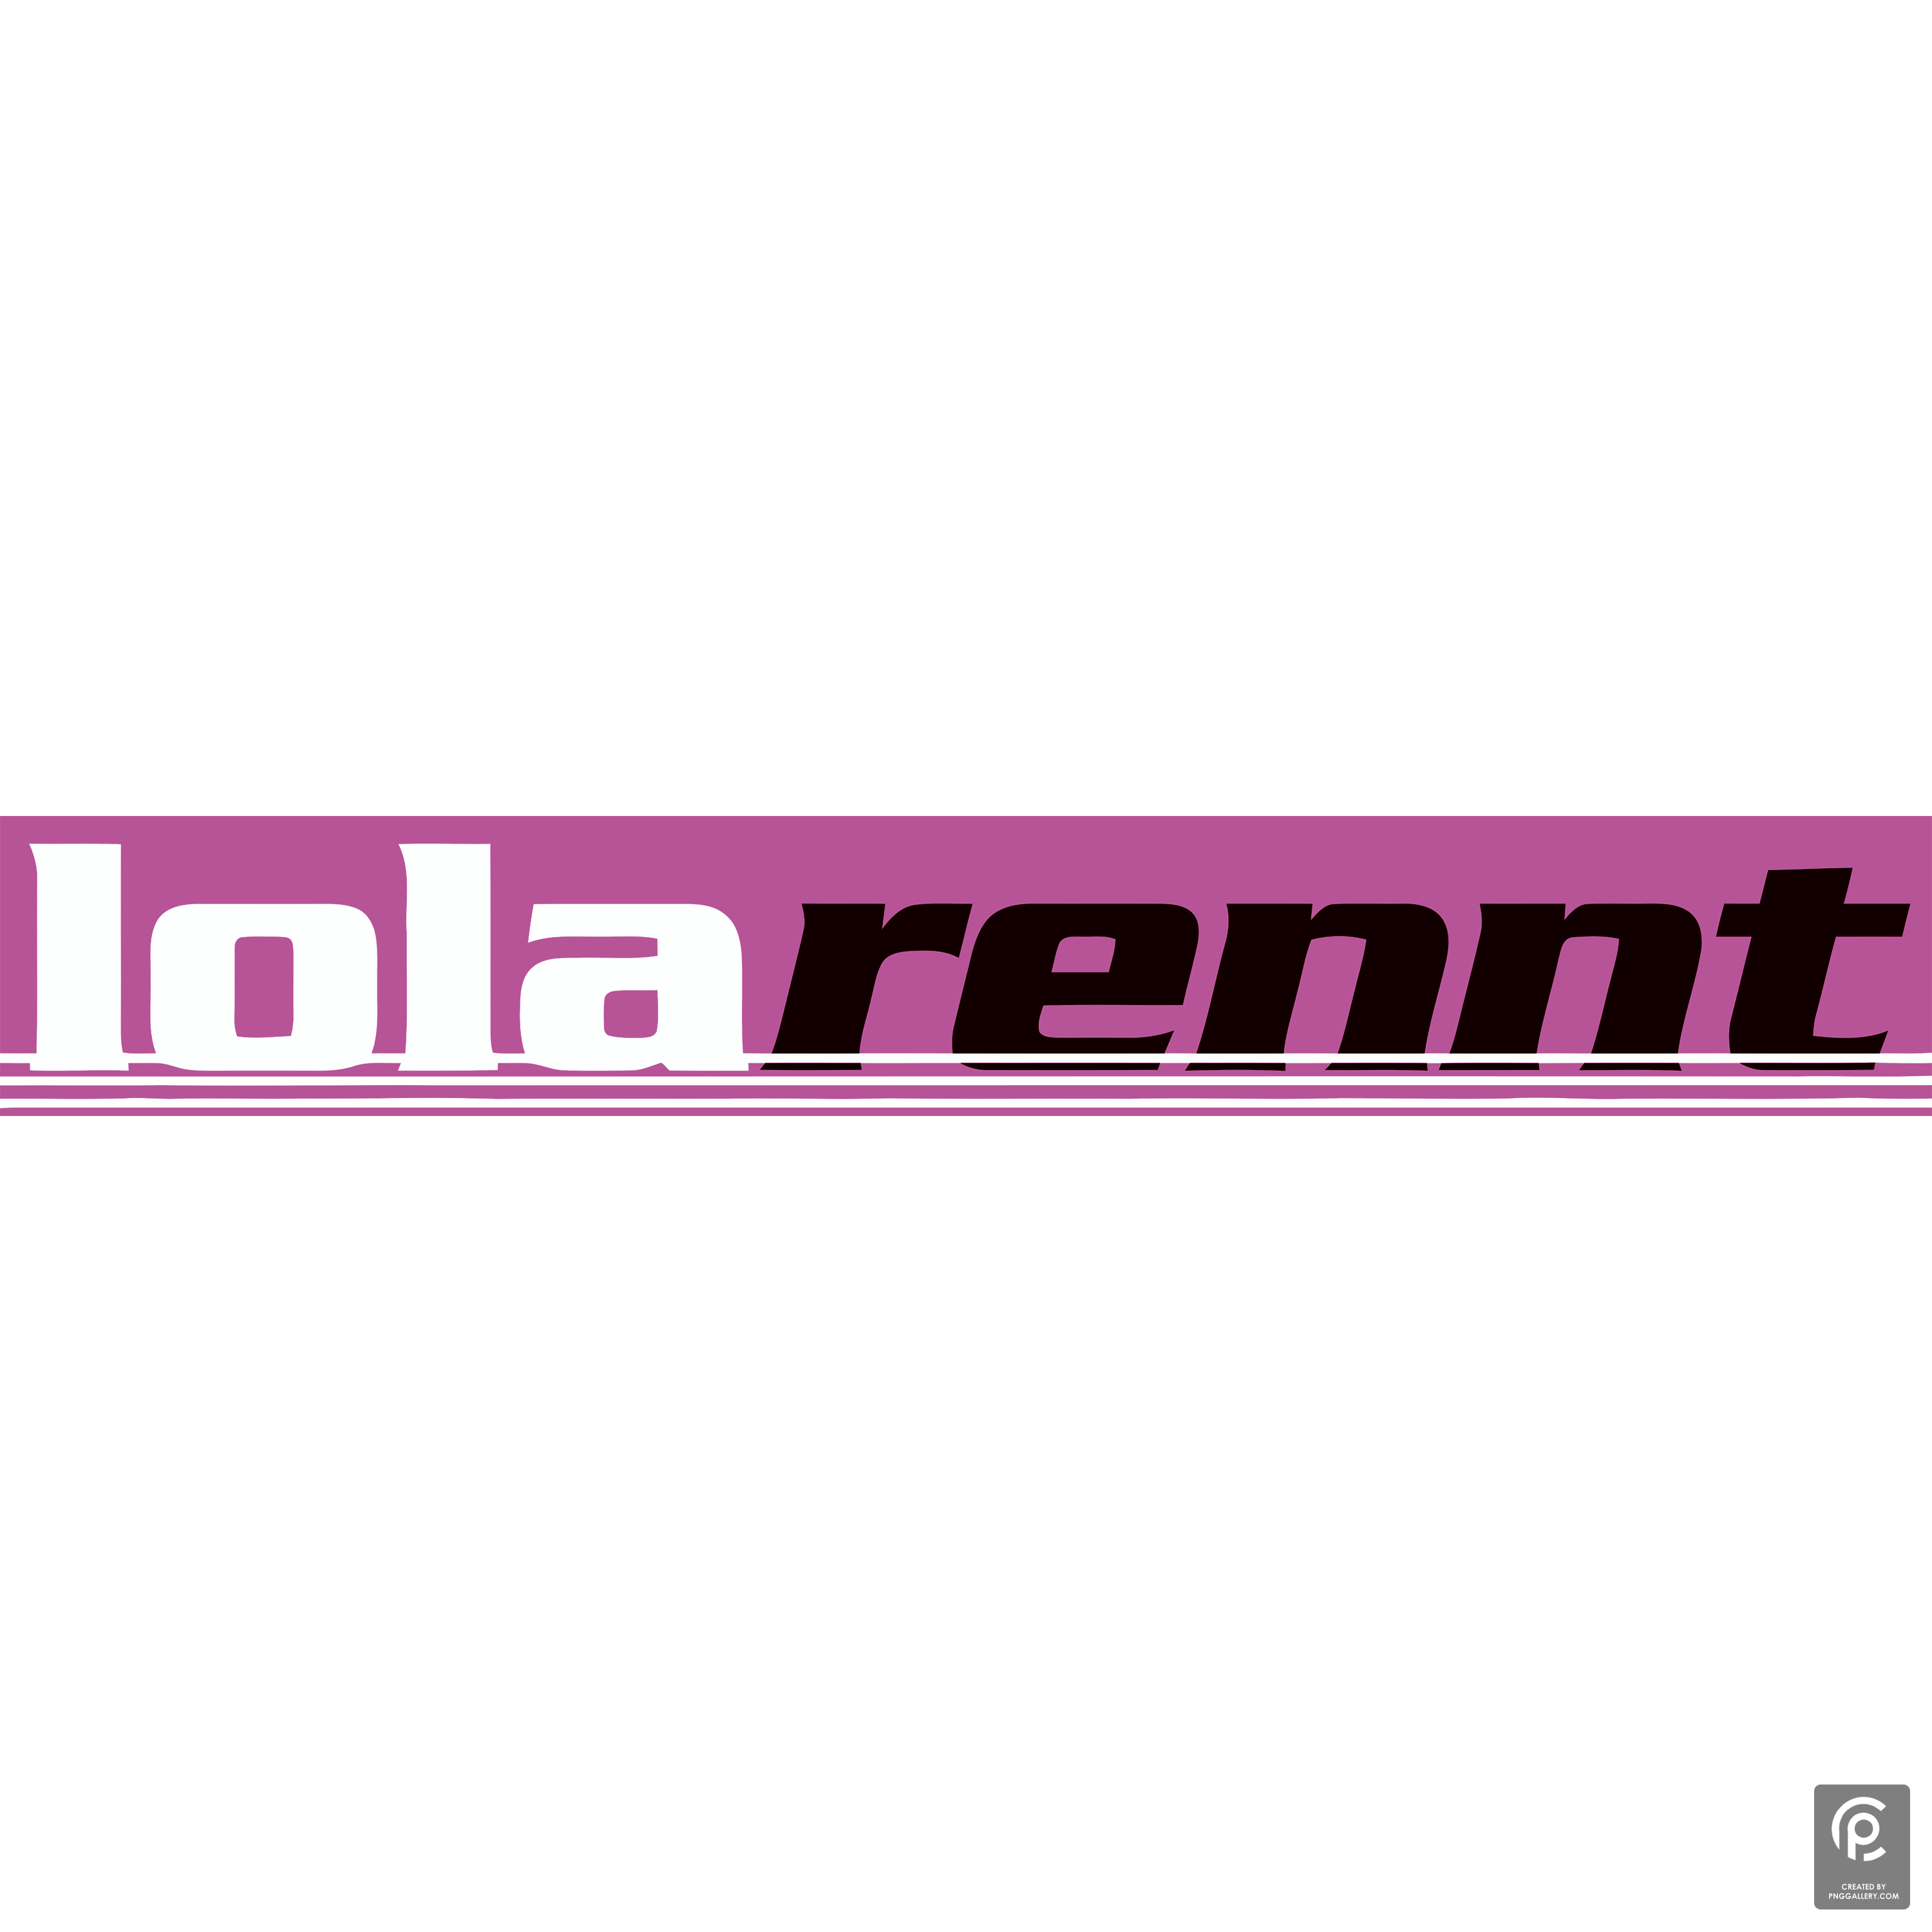 Lola Rennt Logo Transparent Clipart